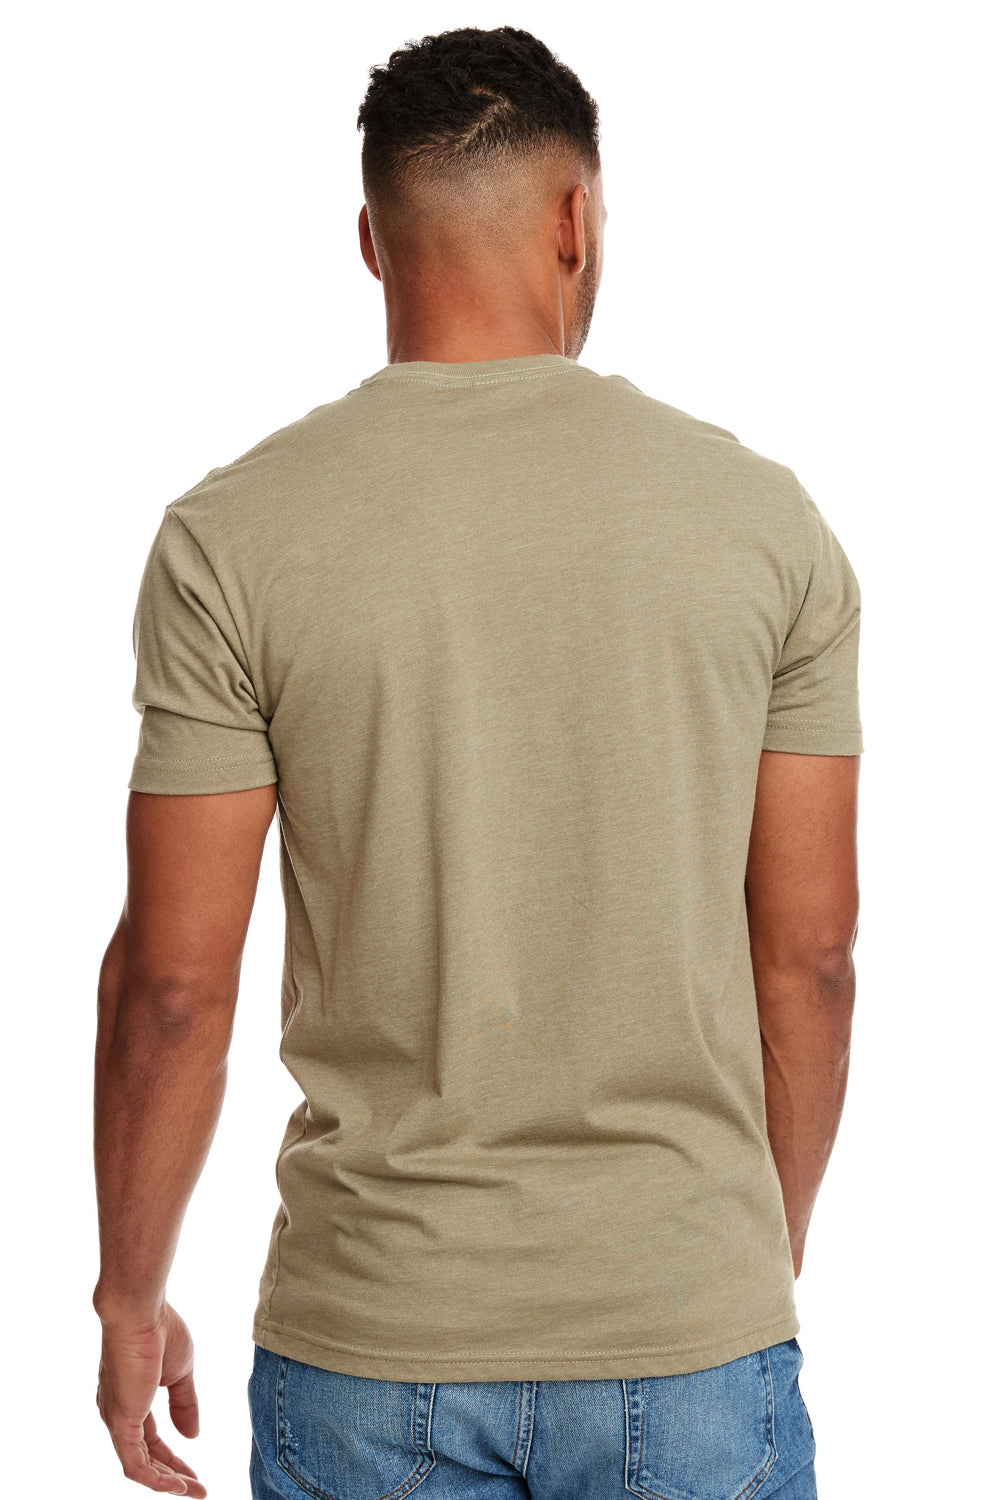 Next Level N6210 Mens CVC Jersey Short Sleeve Crewneck T-Shirt Light Olive Green Back